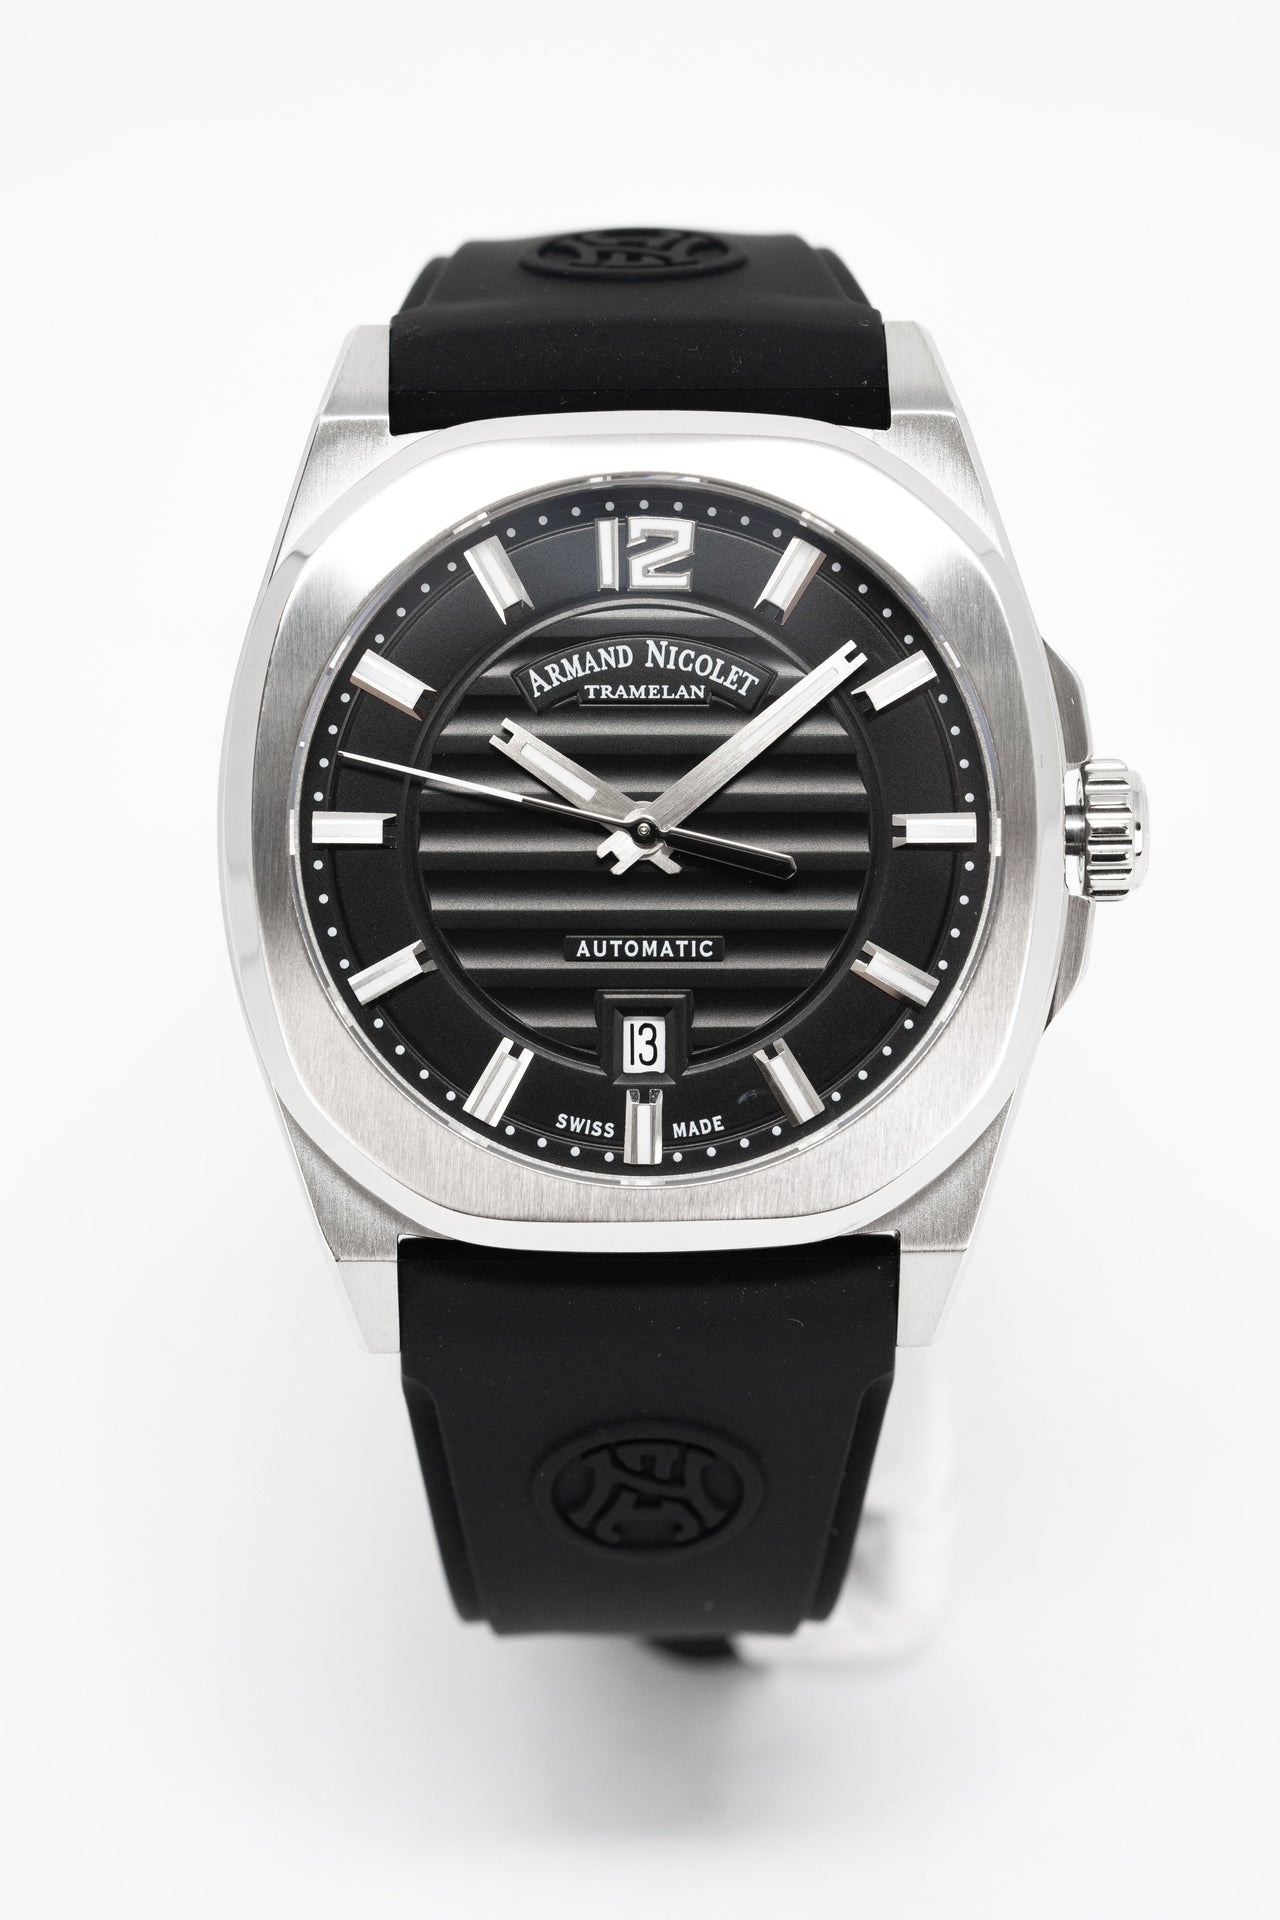 Armand Nicolet Men's Watch J09-3 Black Rubber A660AAA-NR-GG4710N